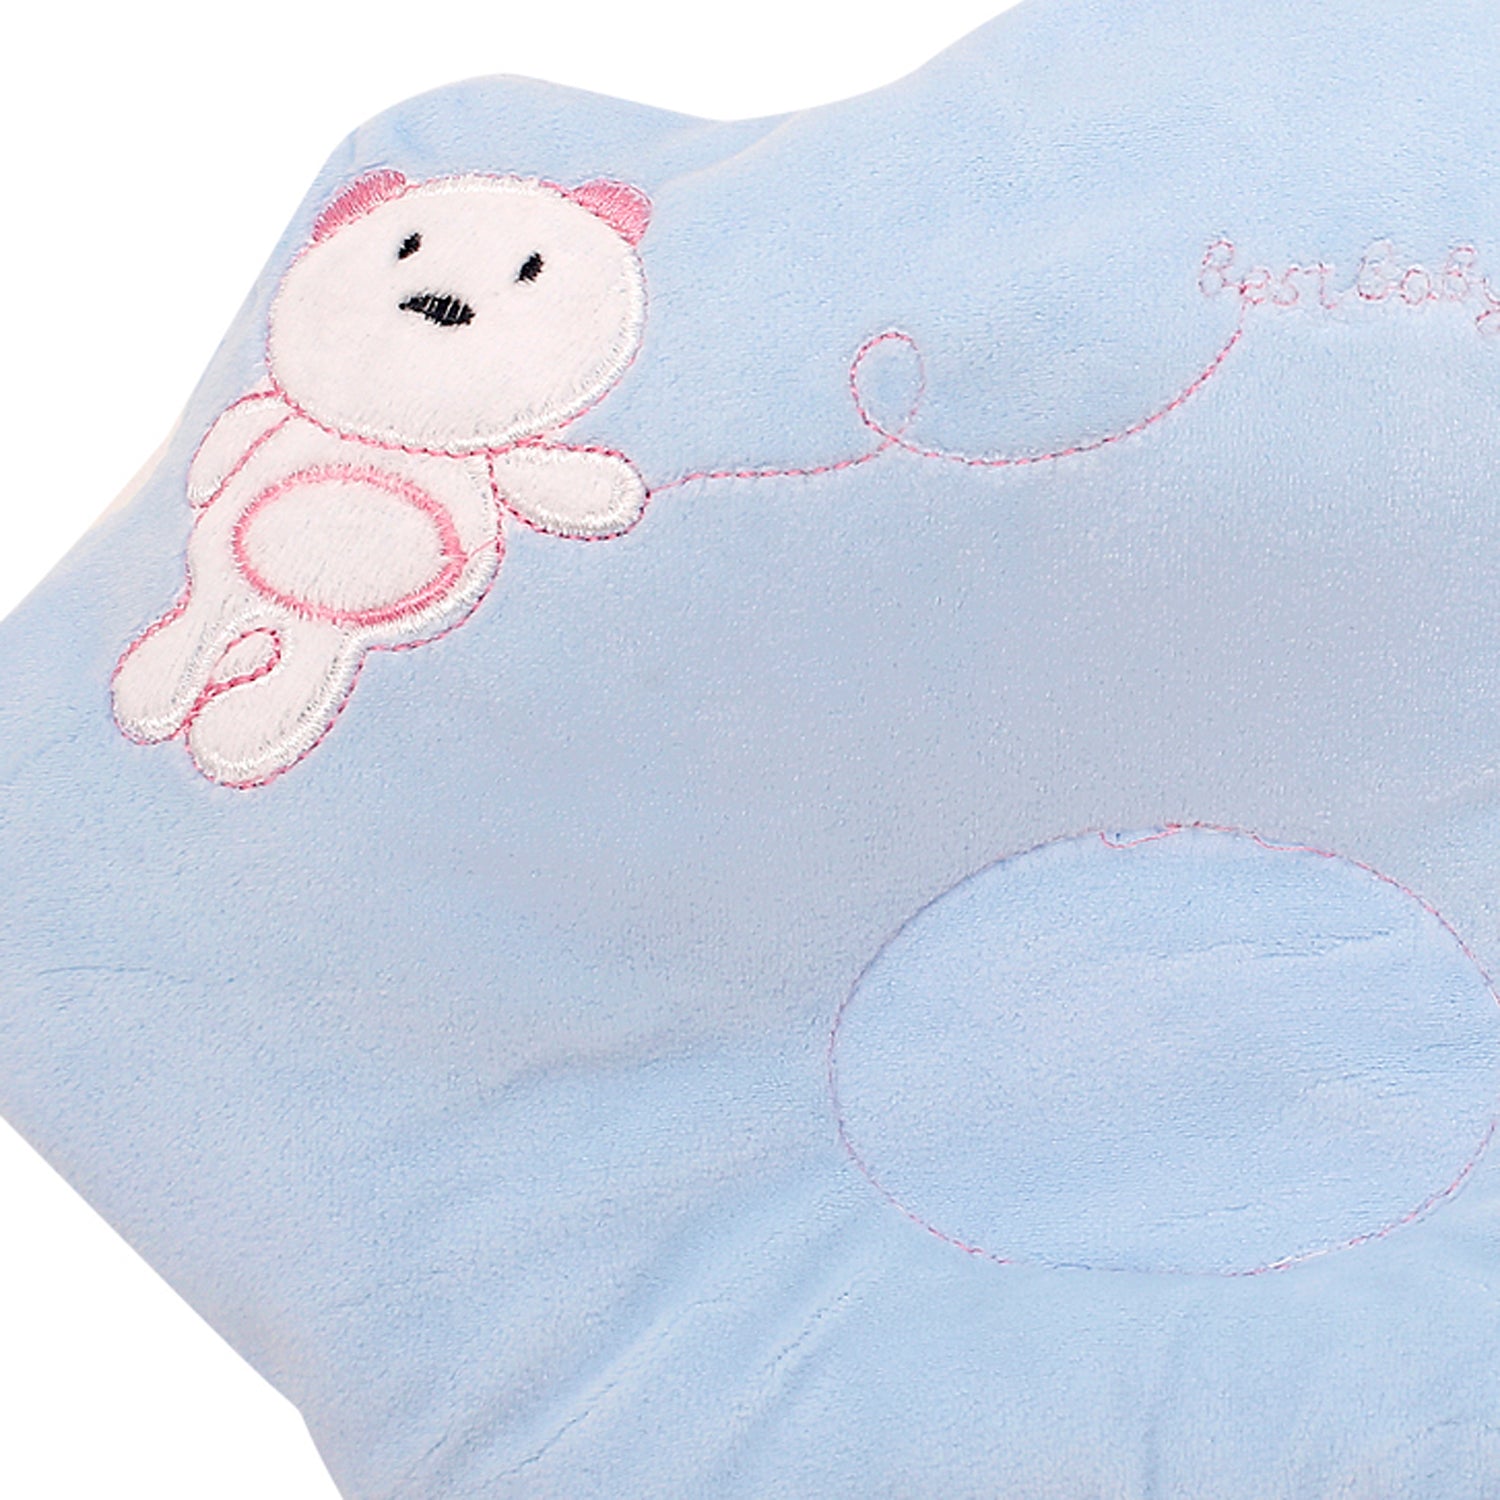 Bear Blue Baby Pillow - Baby Moo